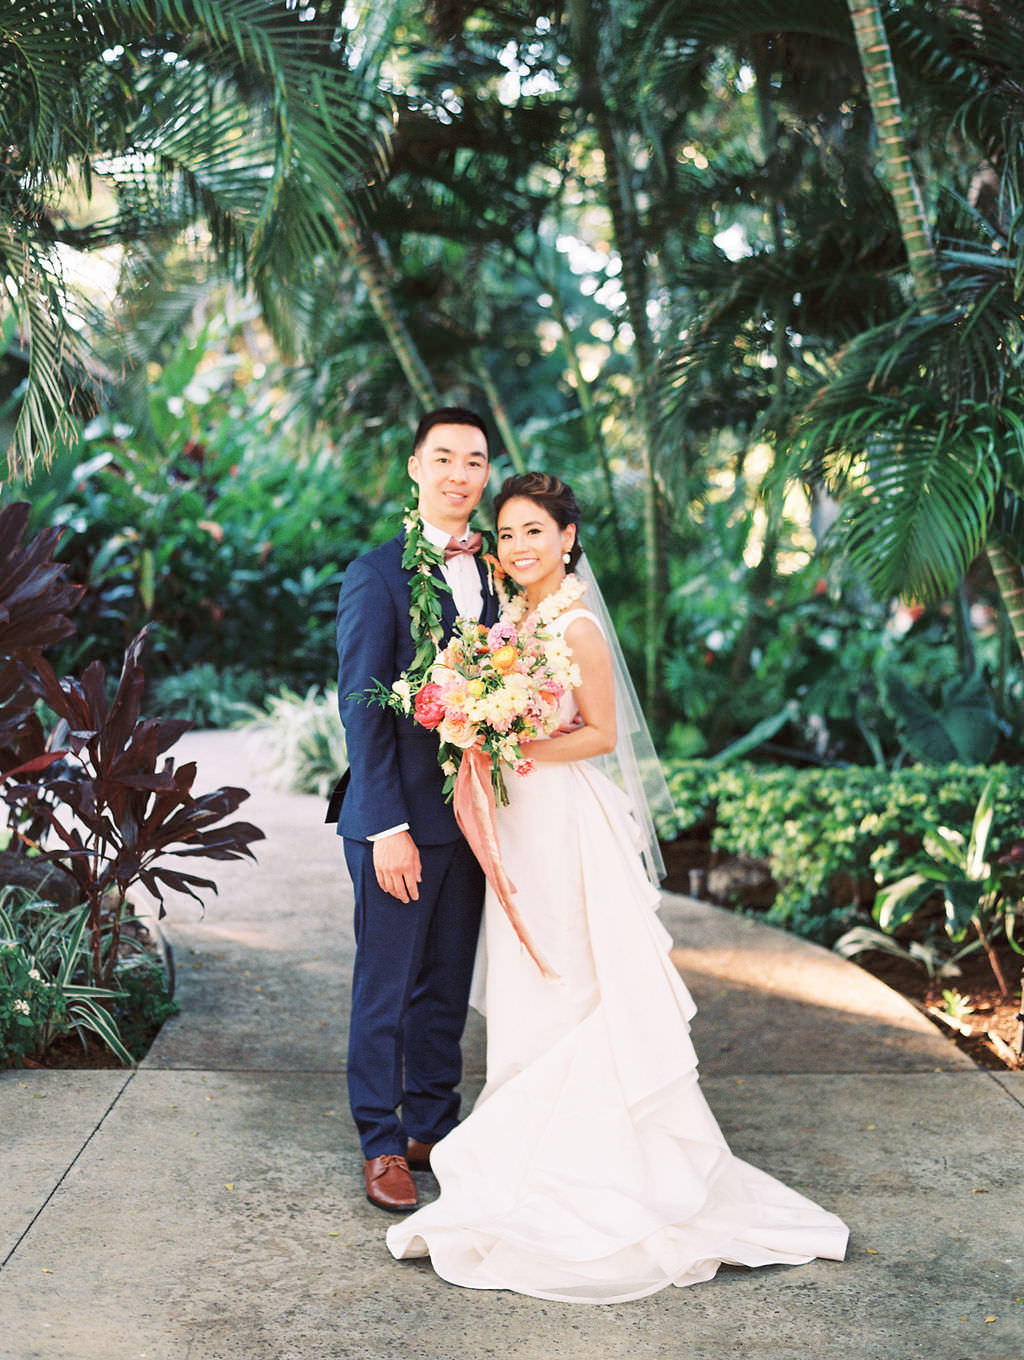 Olowalu Plantation House Wedding in Maui Hawaii